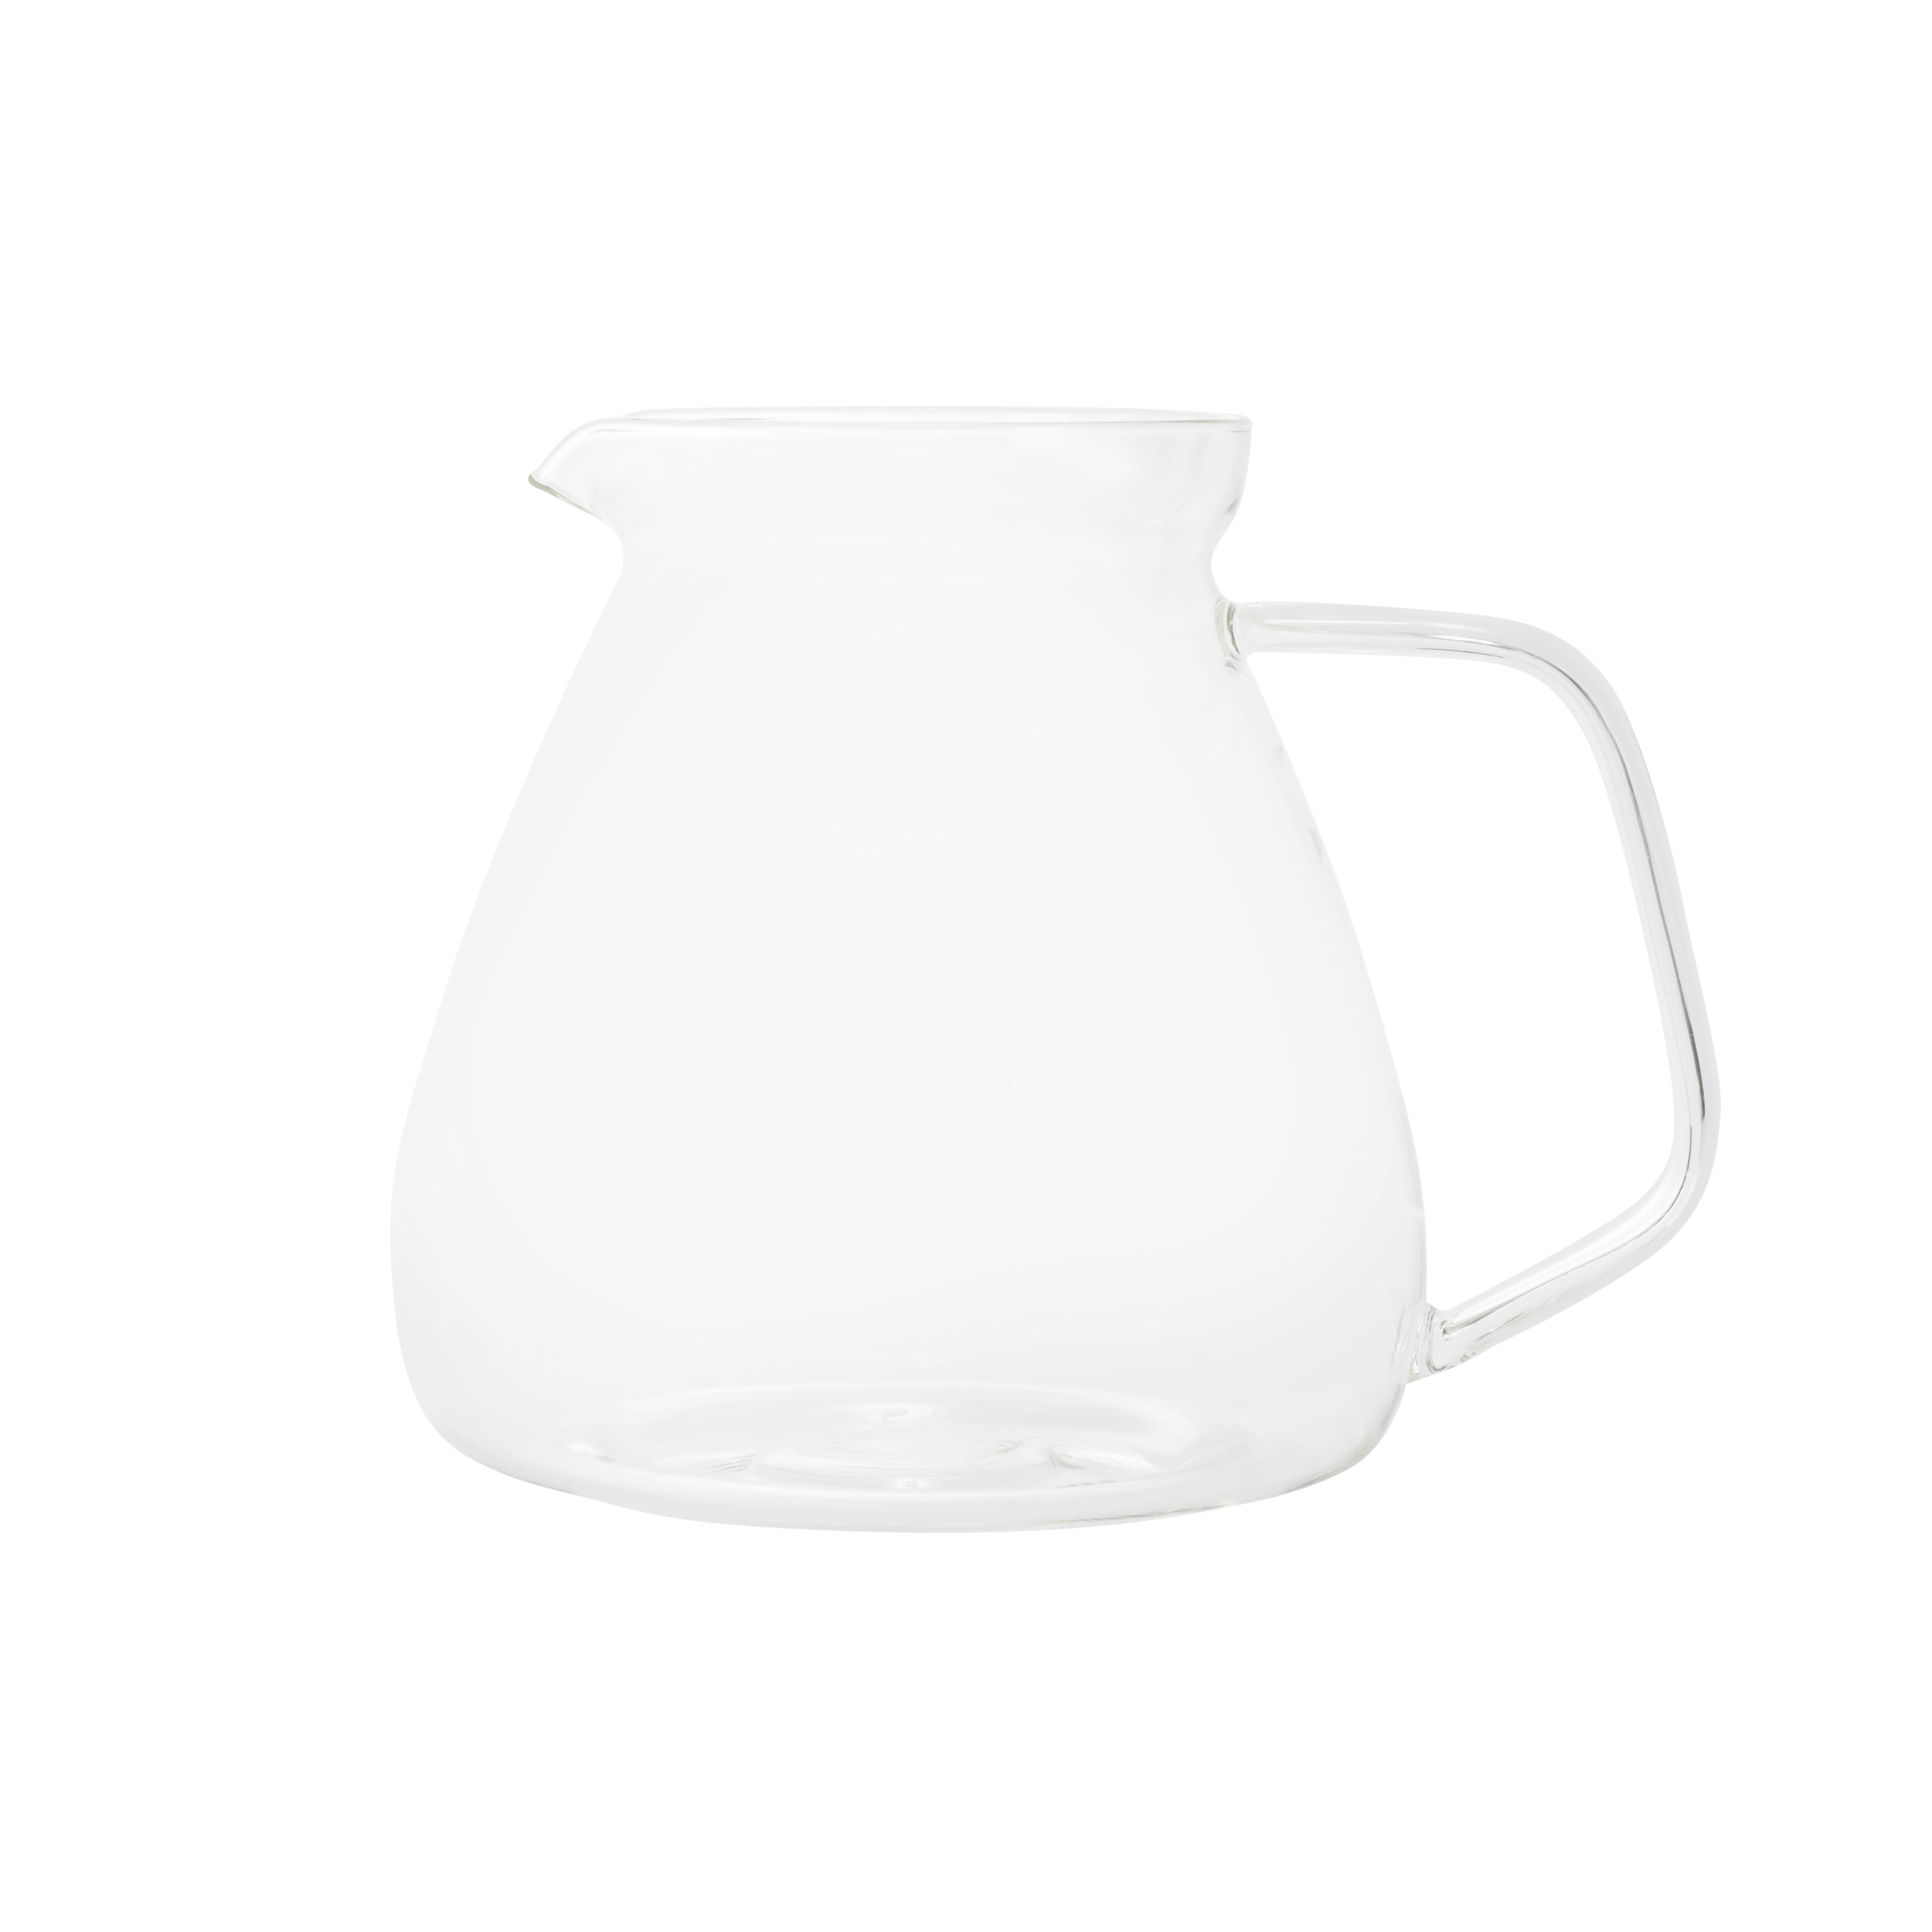 Glass Carafe With Lid - For Metropolitan Brewer – Bonavita